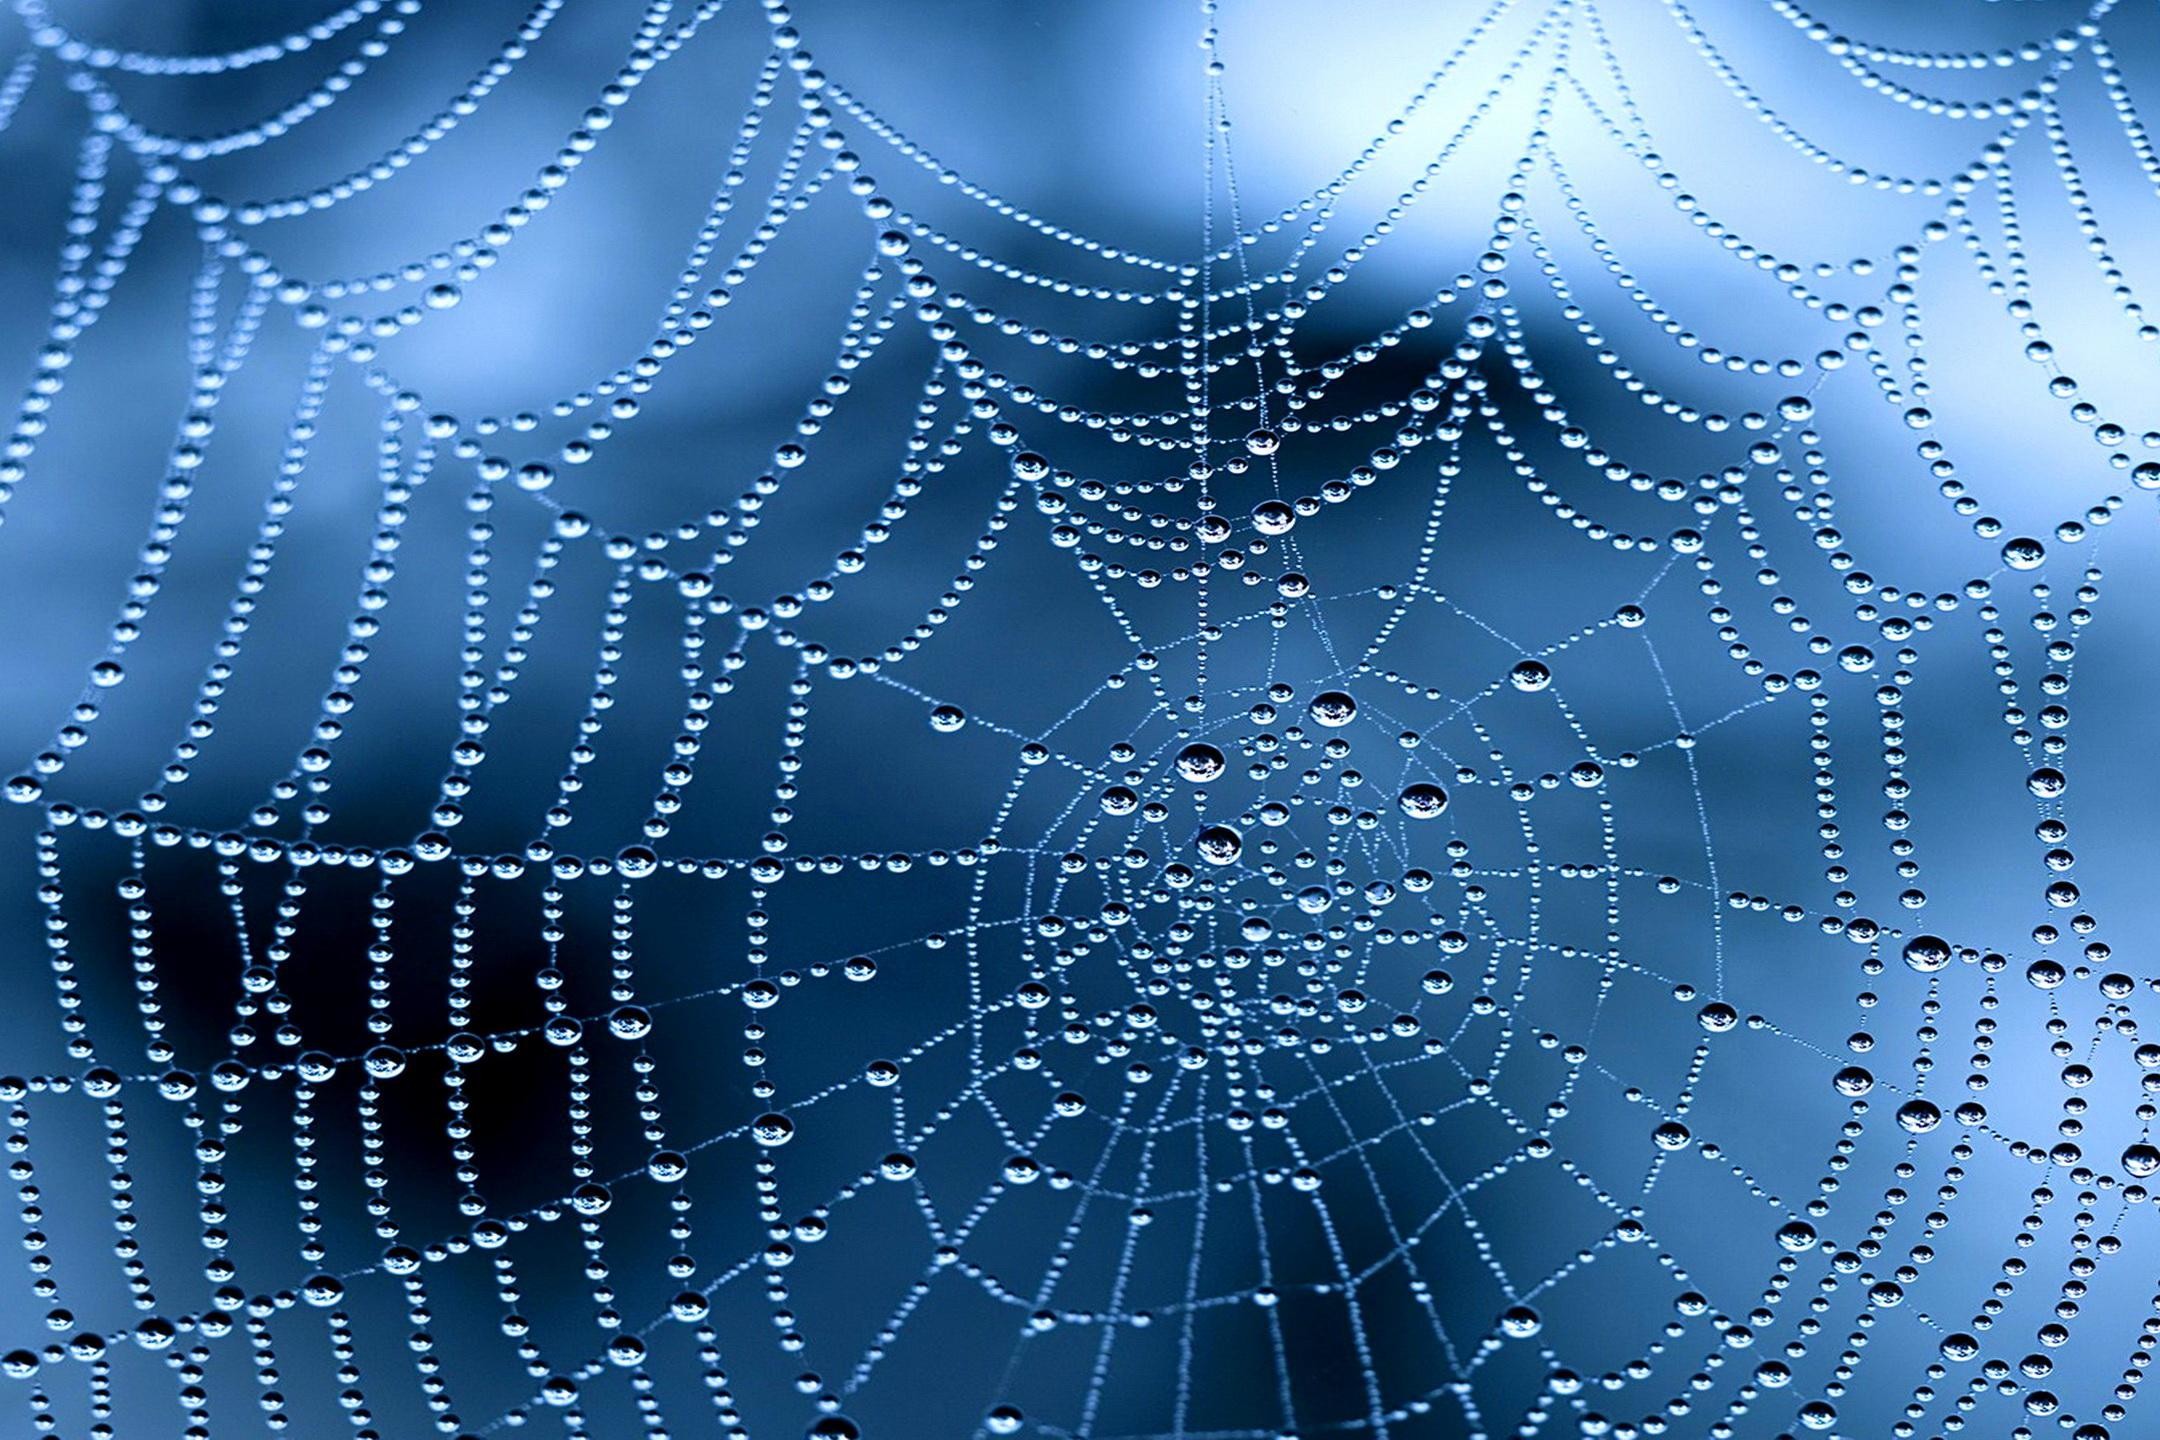 2160x1440 Photography - Spider Web Close-Up Water Drop Dew Drop Wallpaper